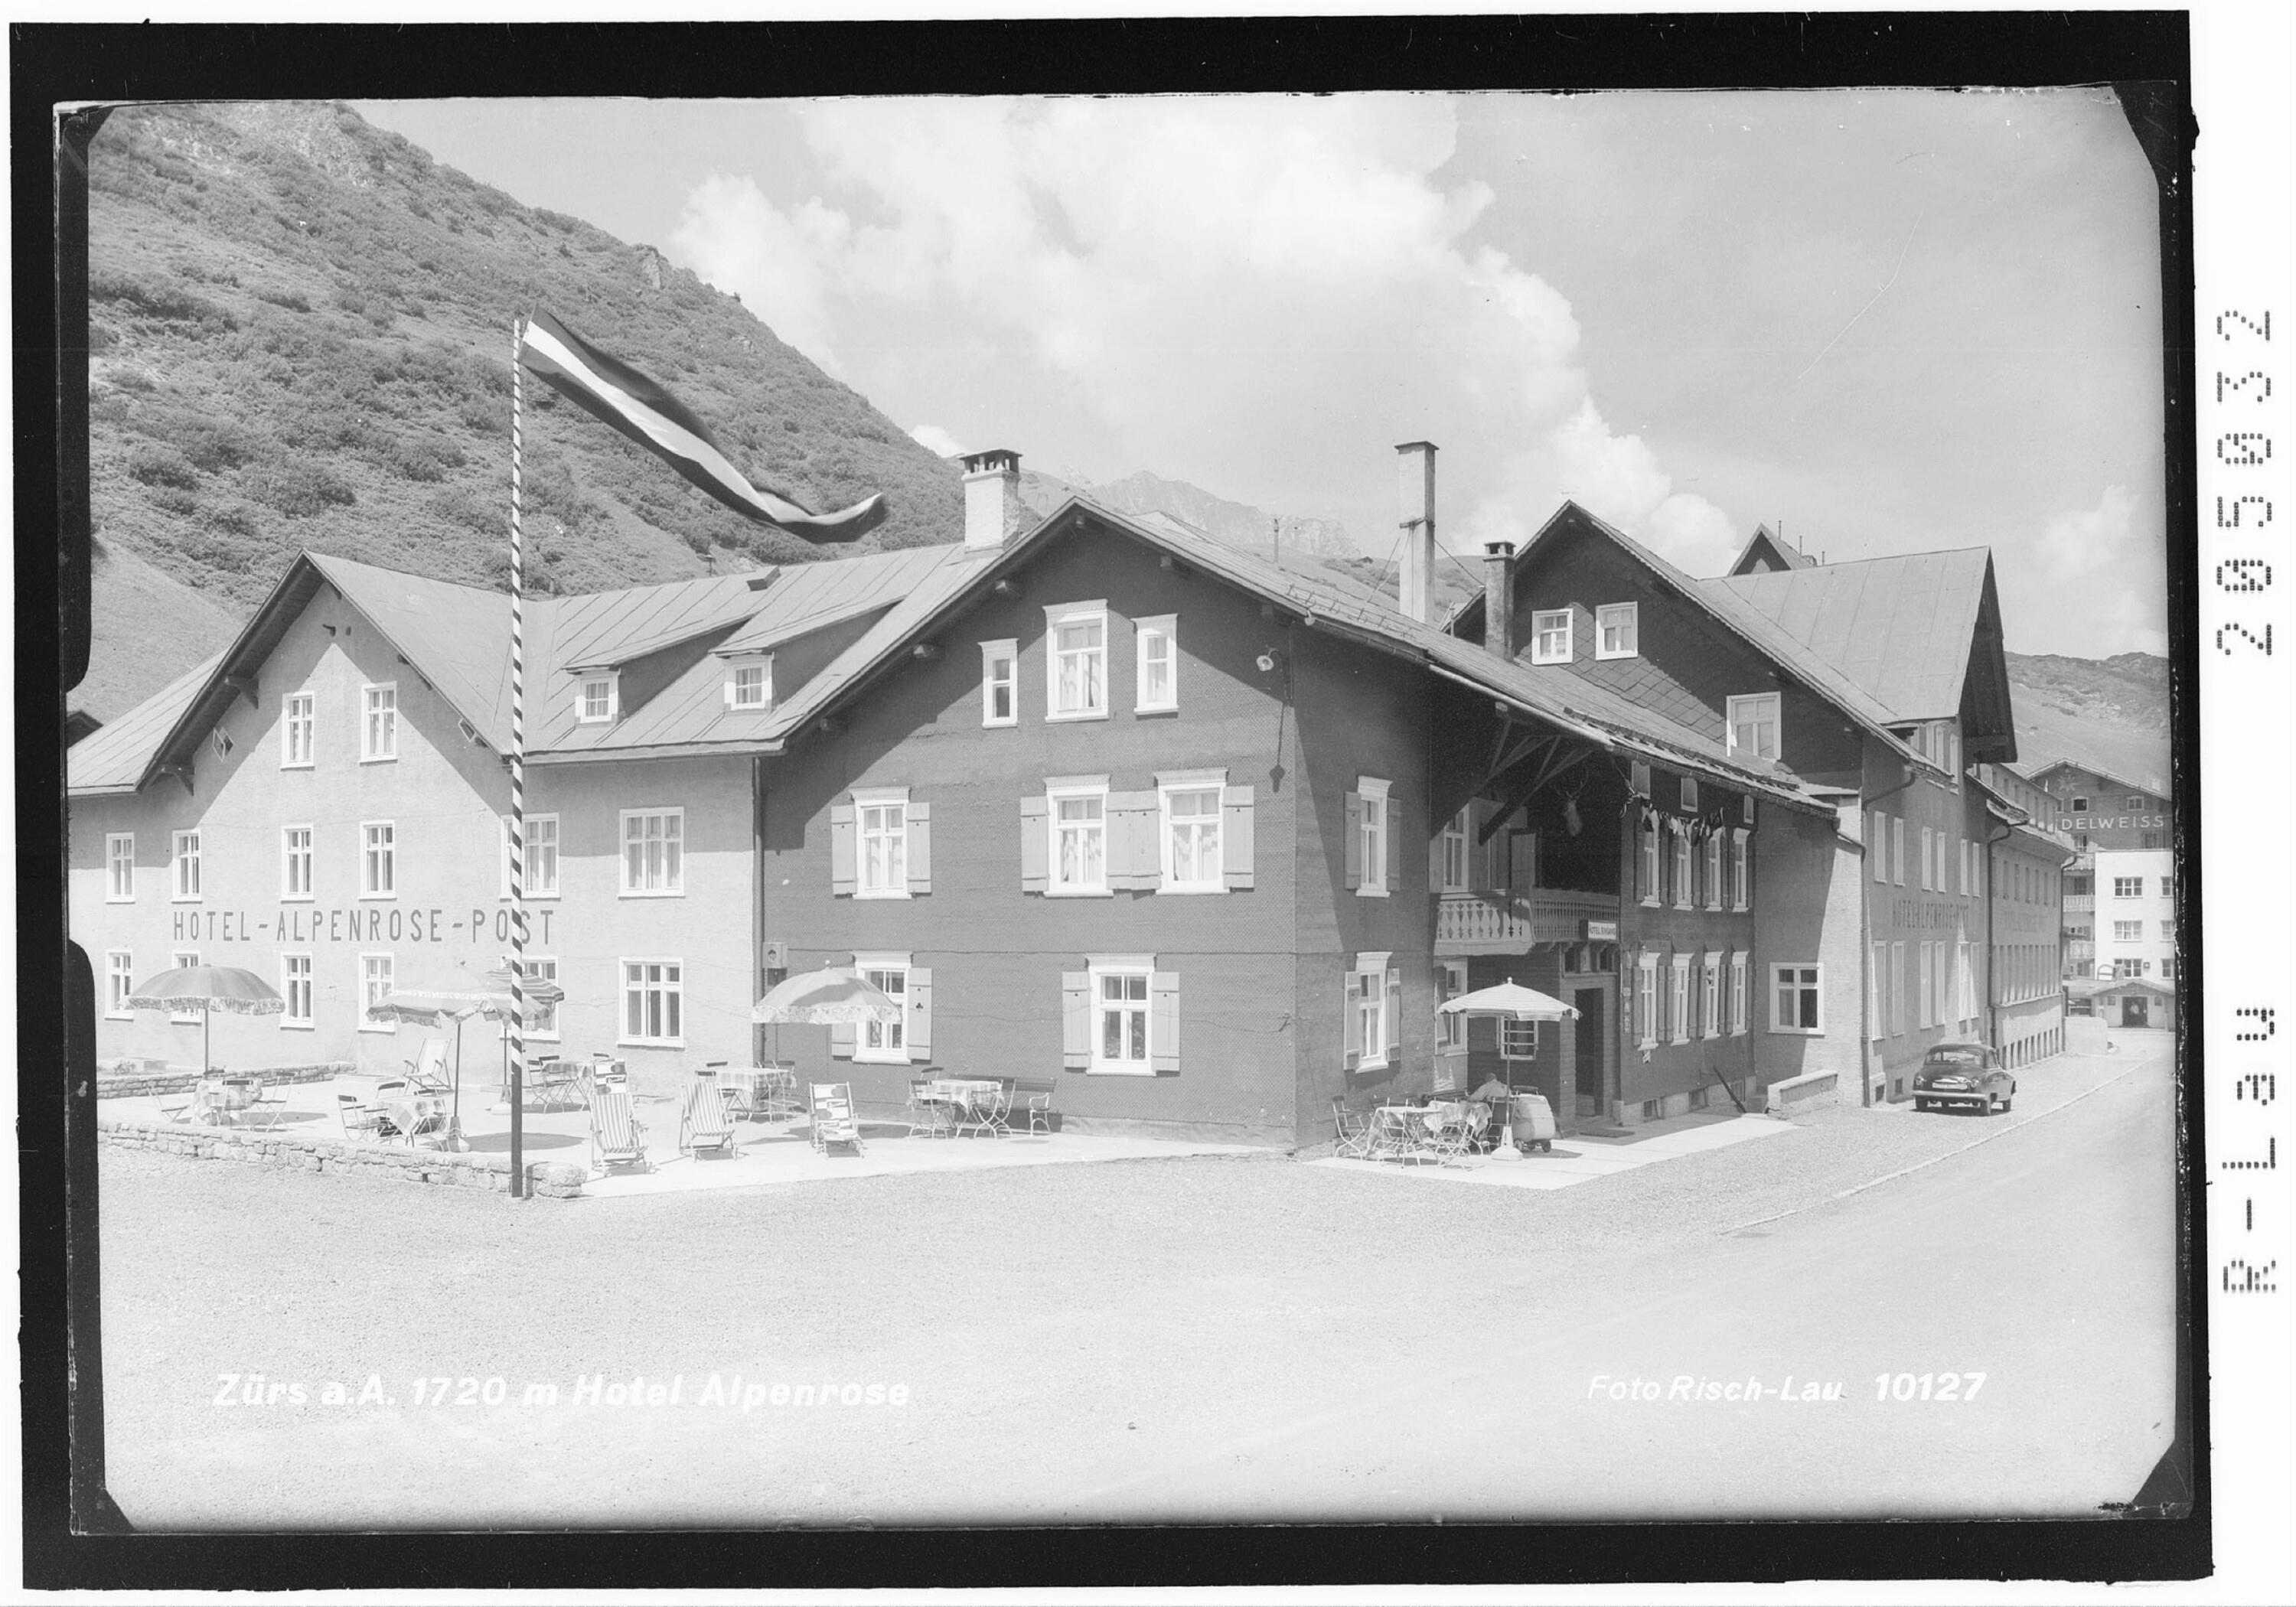 Zürs am Arlberg 1720 m Hotel Alpenrose></div>


    <hr>
    <div class=